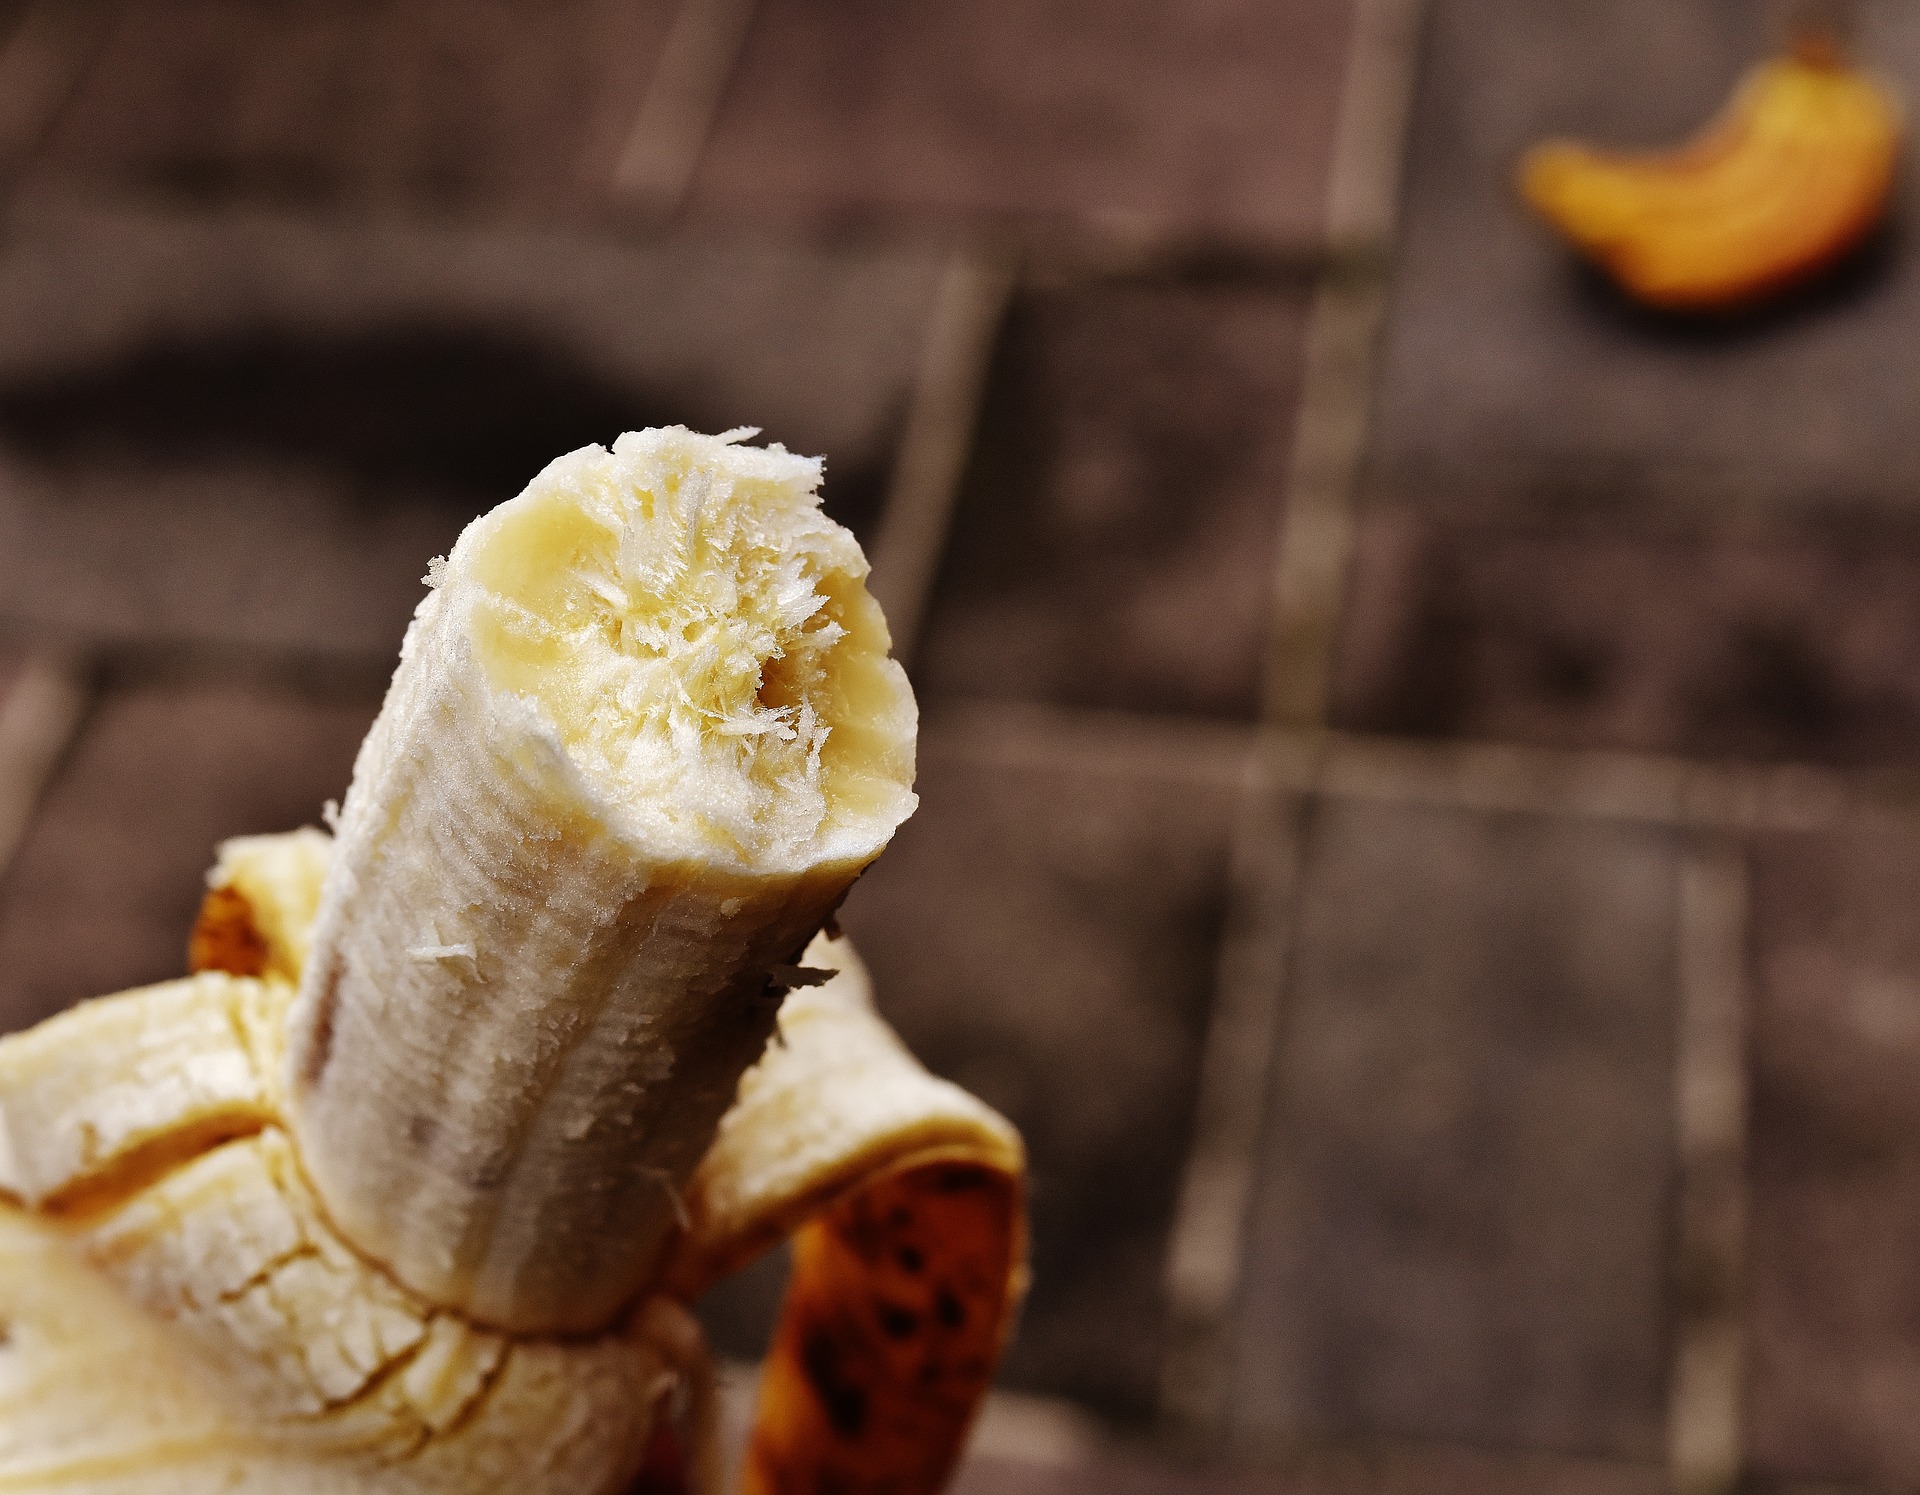 Banana by Alexis_Fotos via Pixabay